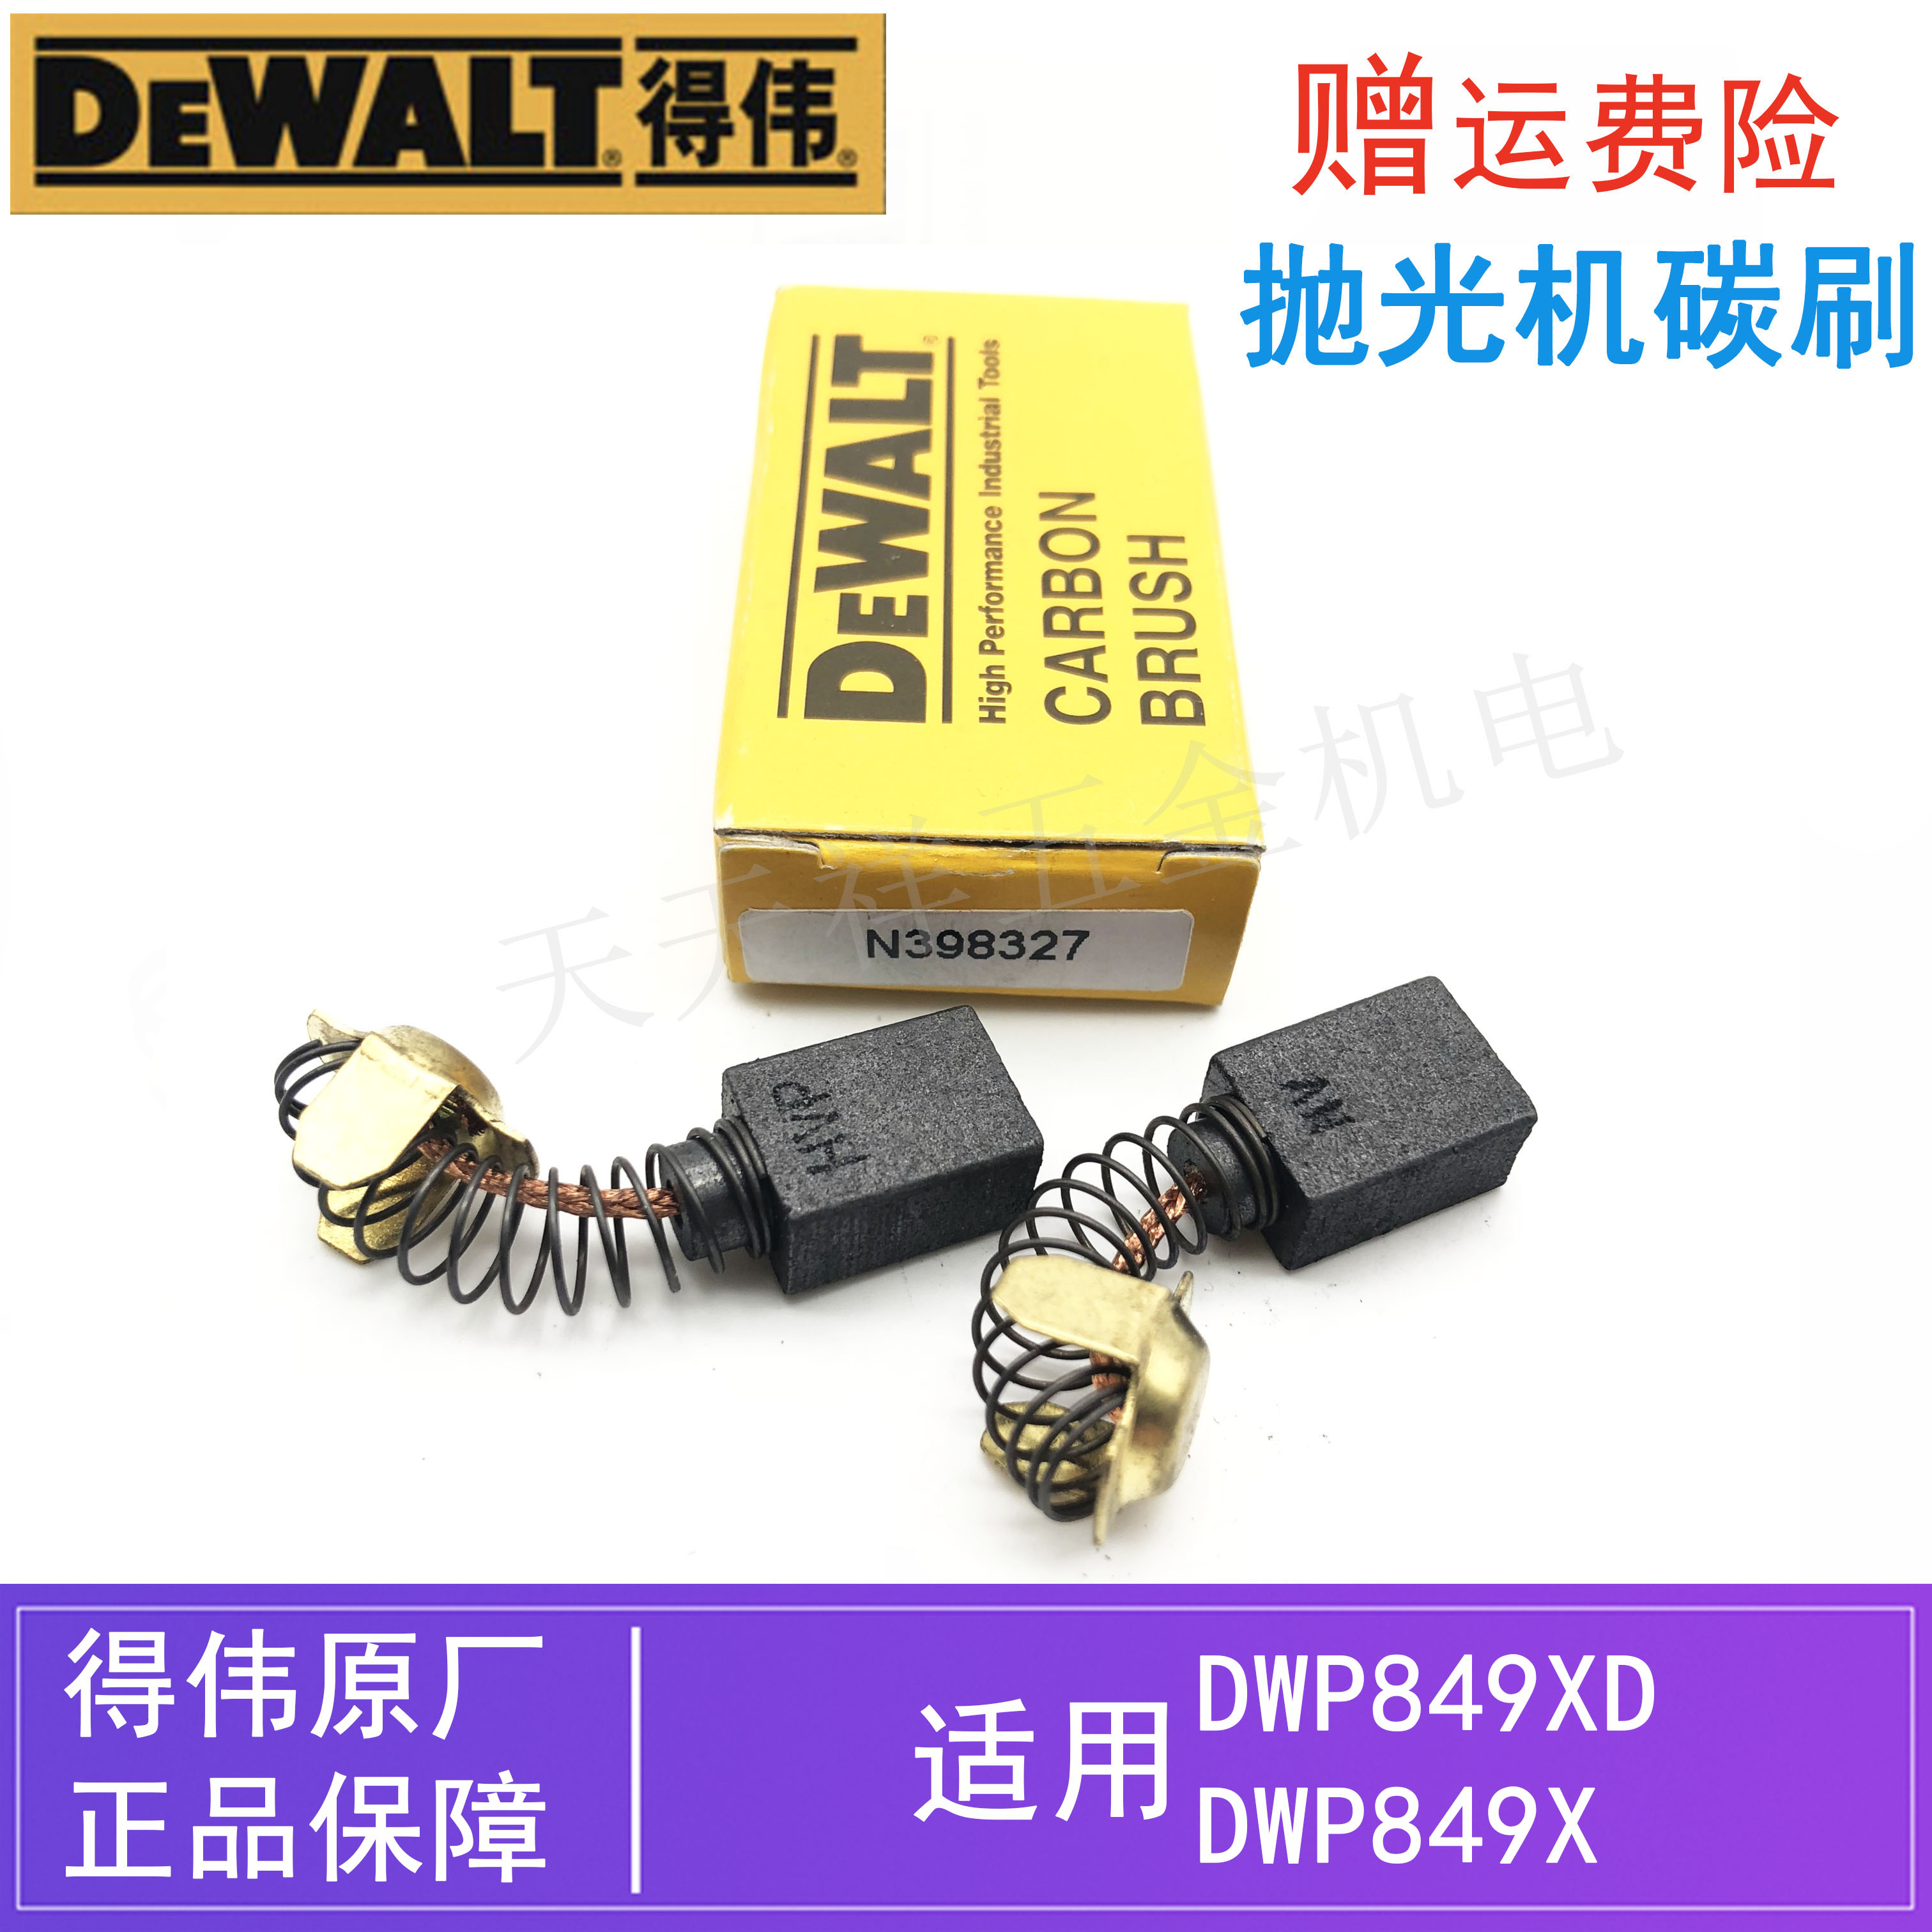 DEWALT原装得伟抛光机碳刷DWP849X电动打磨机汽车美容打蜡机/电刷